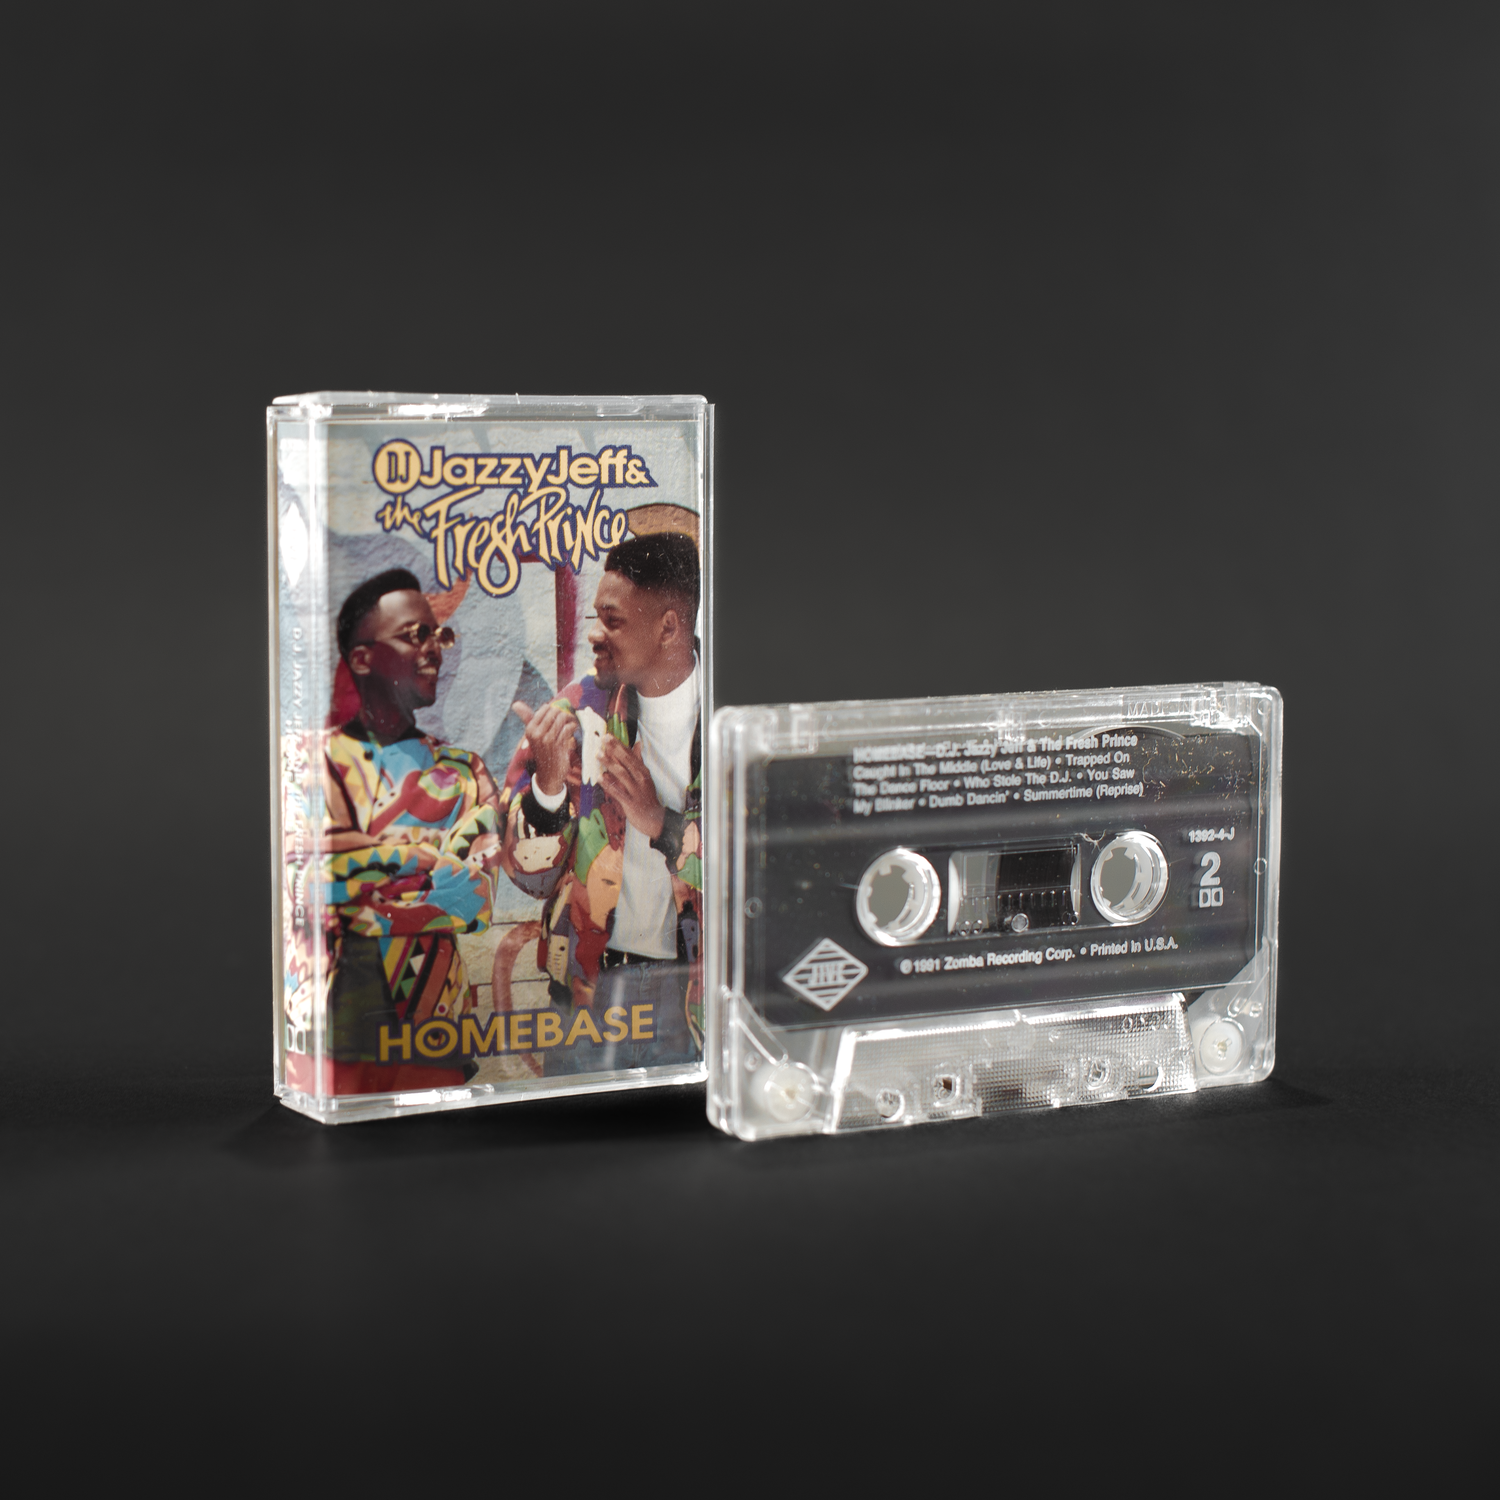 DJ Jazzy Jeff & Fresh Prince - Homebase (Vintage Cassette)